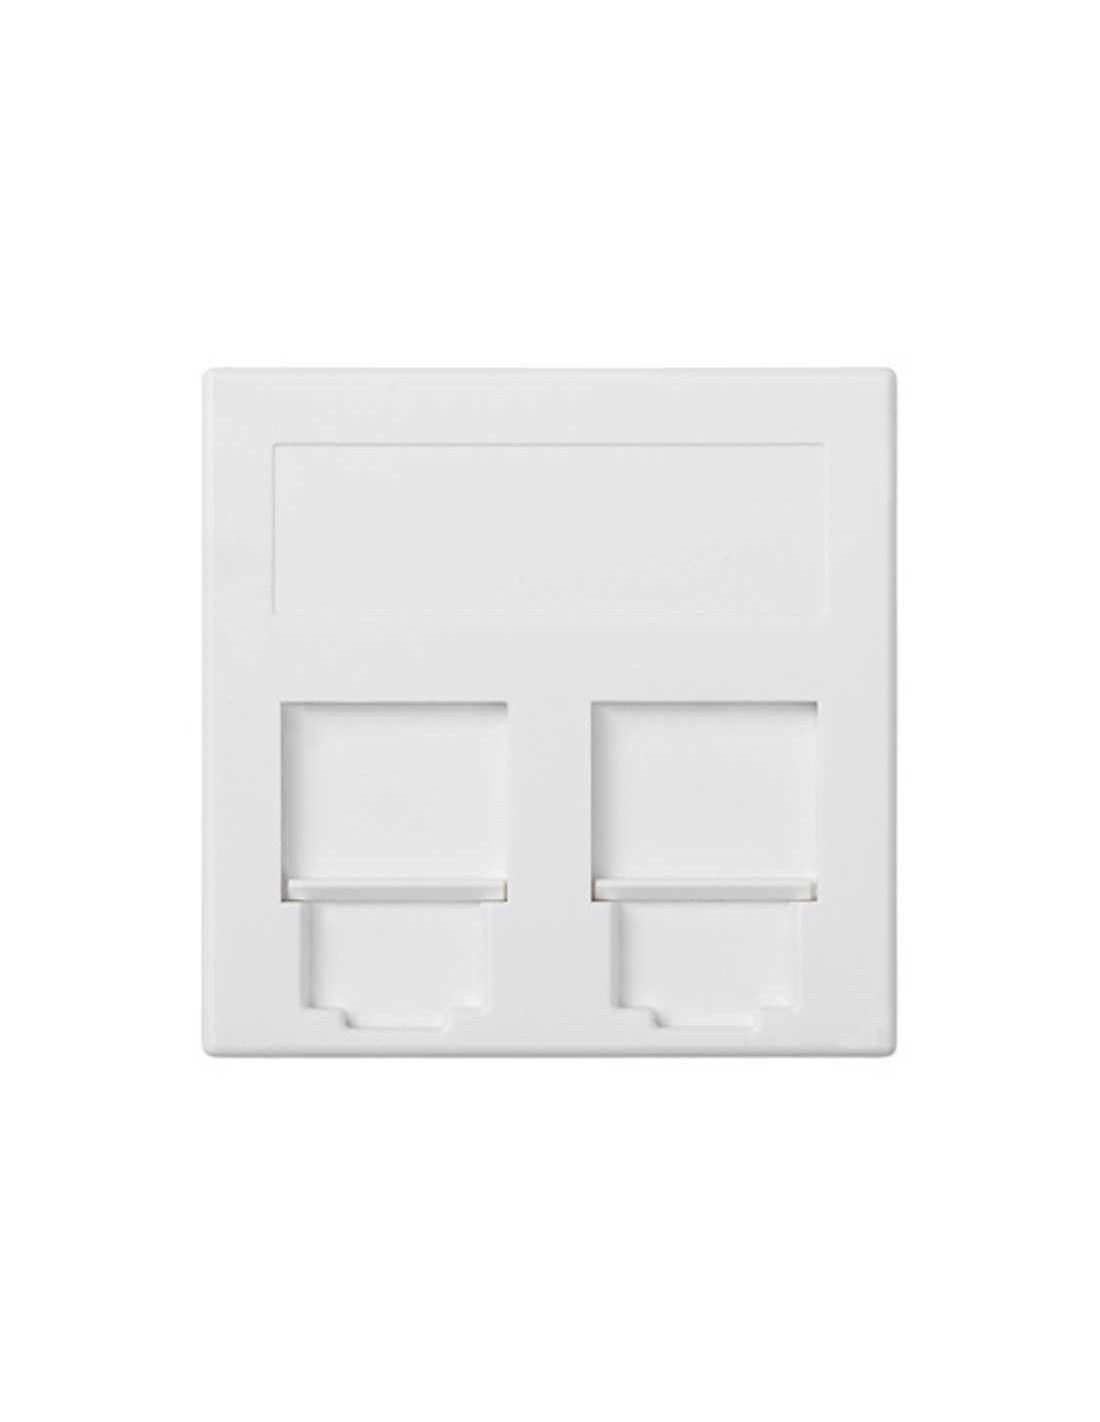 Kit caja pared de superficie-empotrar 3 elementos dobles con 1 enchufe  doble,1 SAI doble y 2 placas 1RJ45 blanco Simon 500 Cima